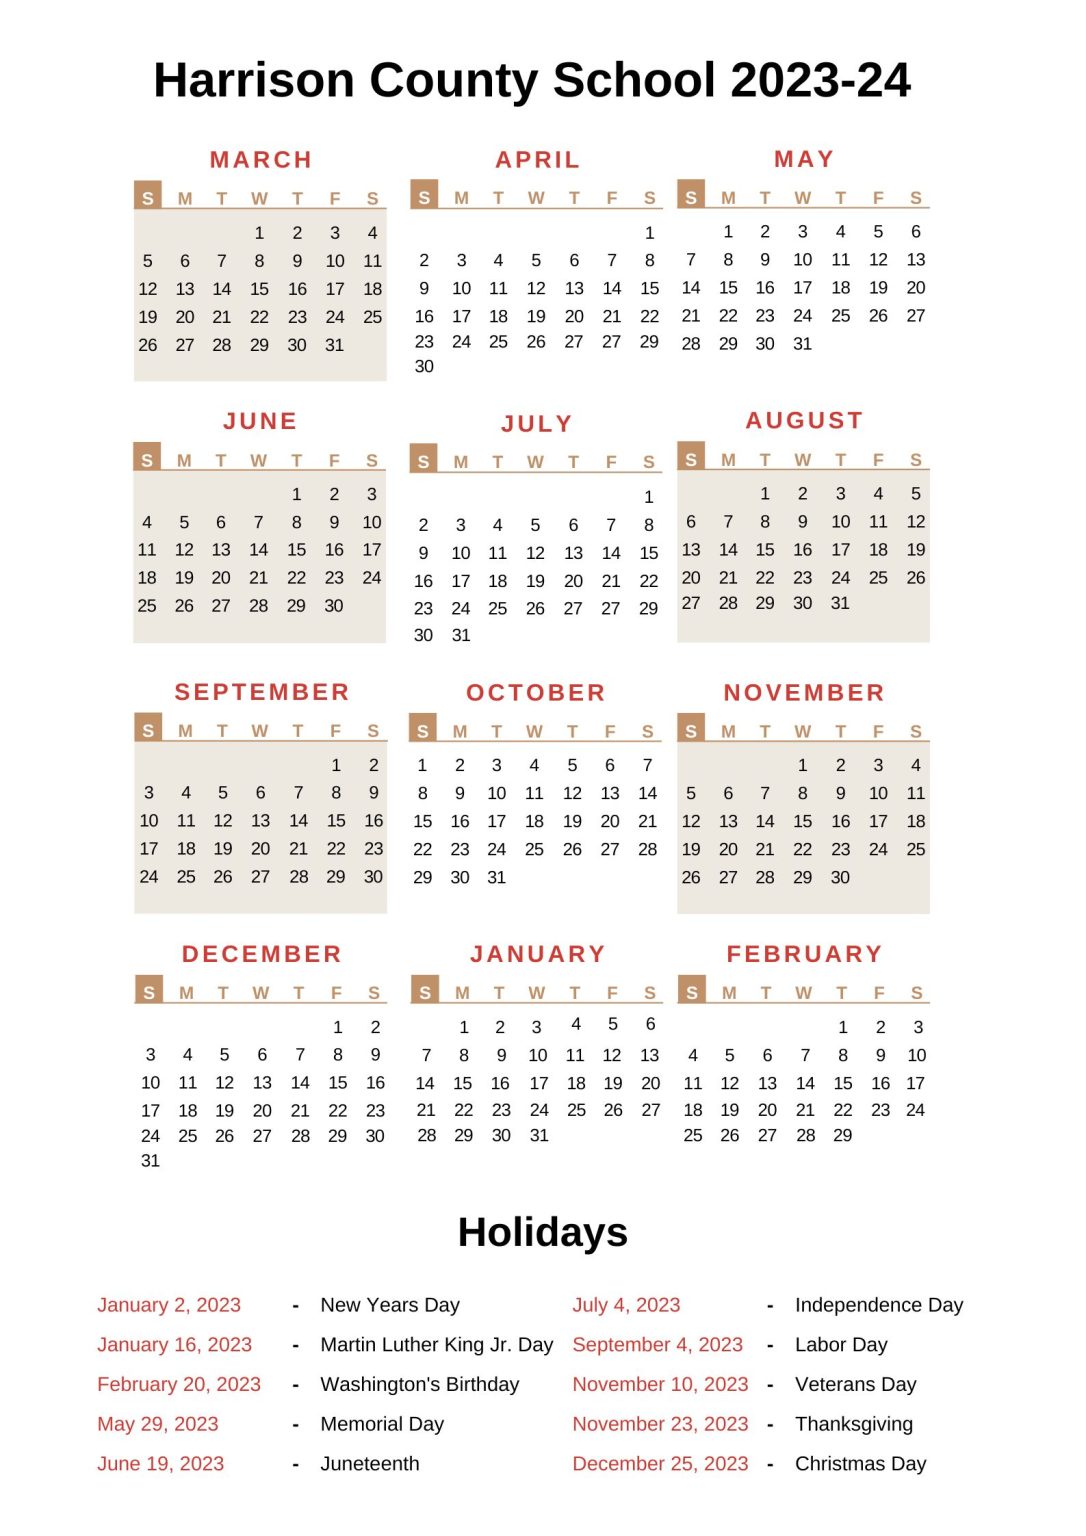 Harrison County Schools Calendar 202324 With Holidays